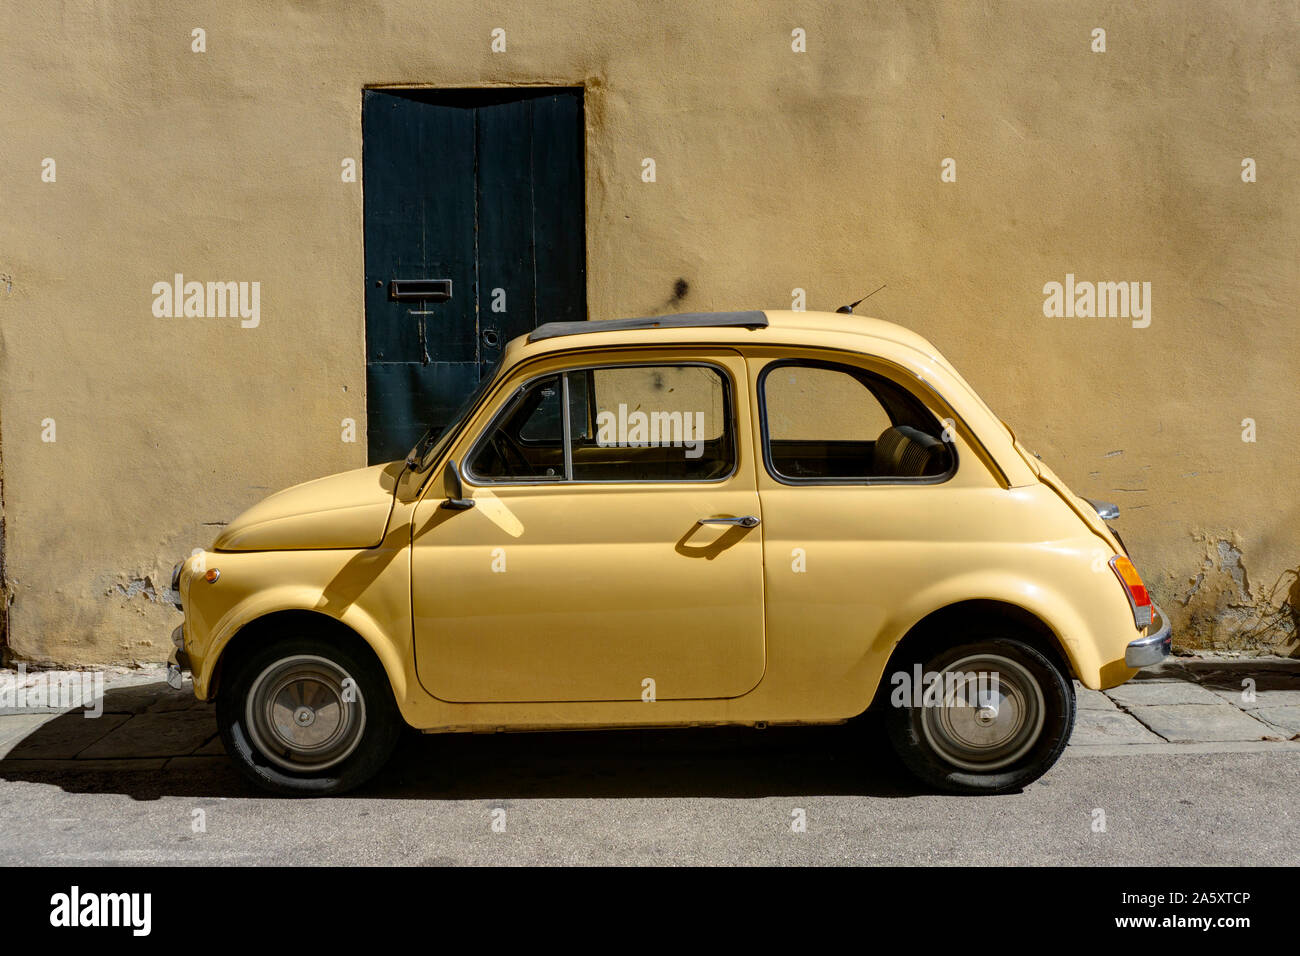 Gelbe Fiat 500 Vor gelb getünchten Wand Lucca Italien geparkt Stockfoto